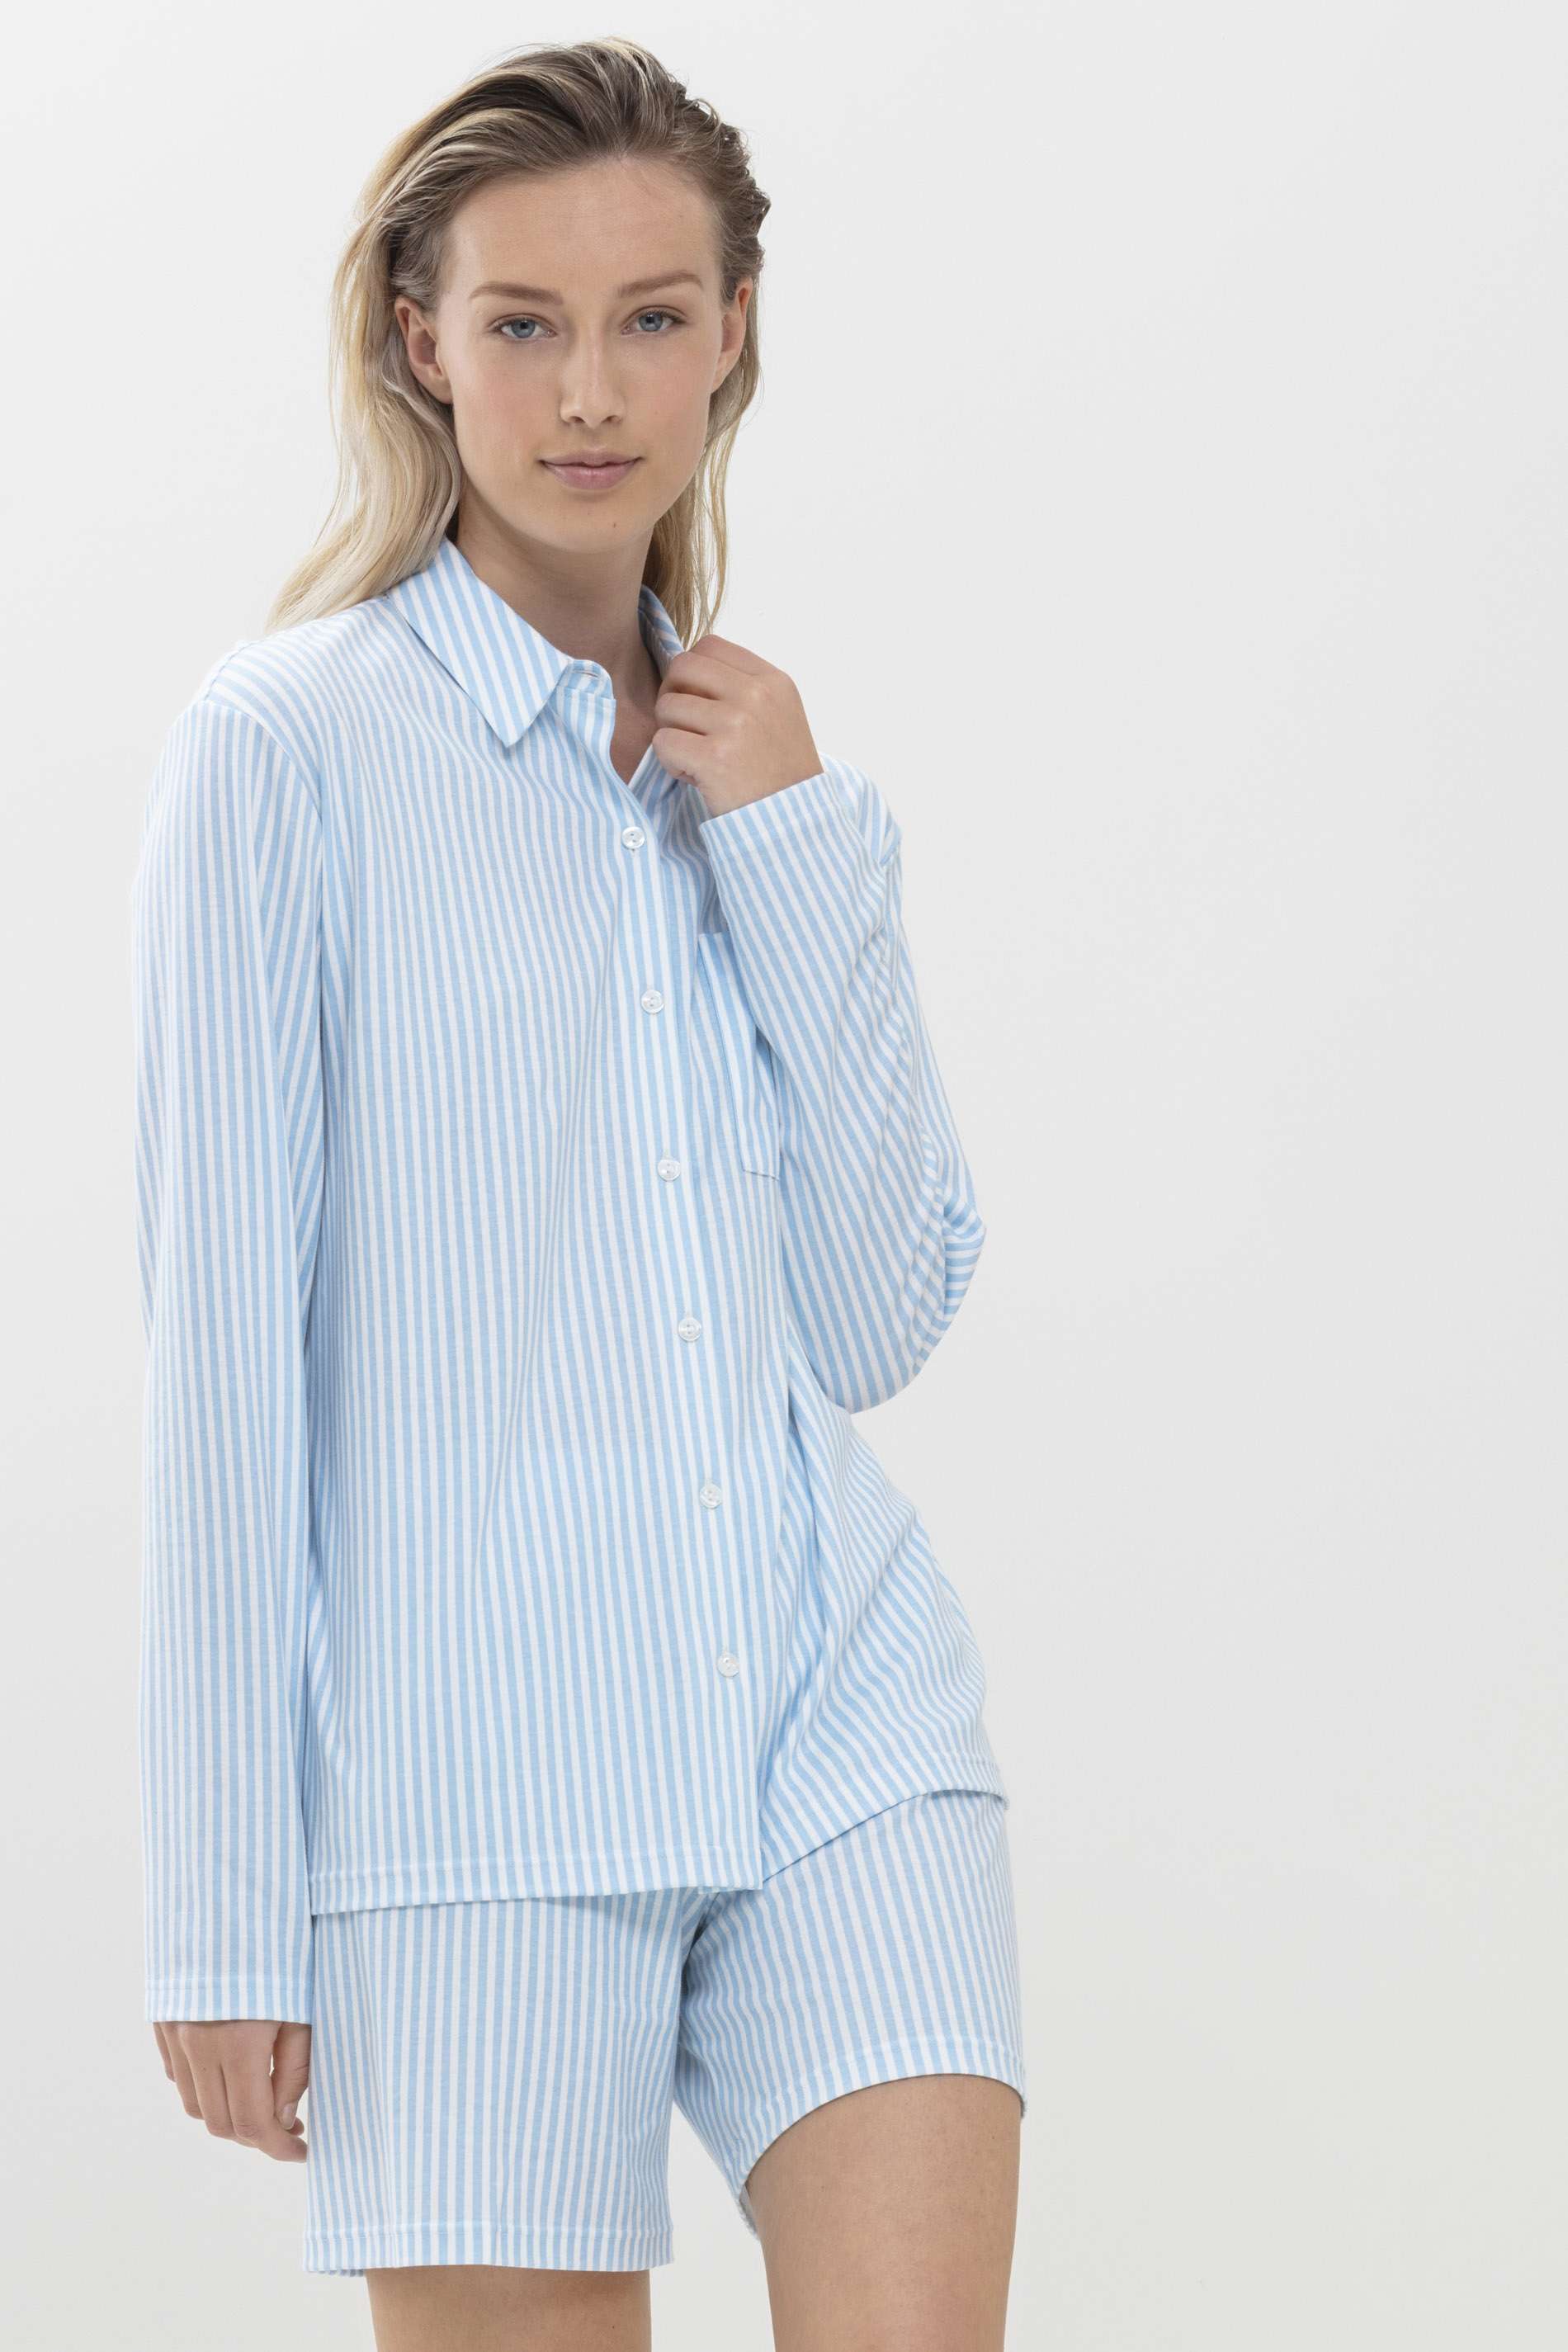 Pyjama Shirt Dream Blue Serie Sleepsation Festlegen | mey®